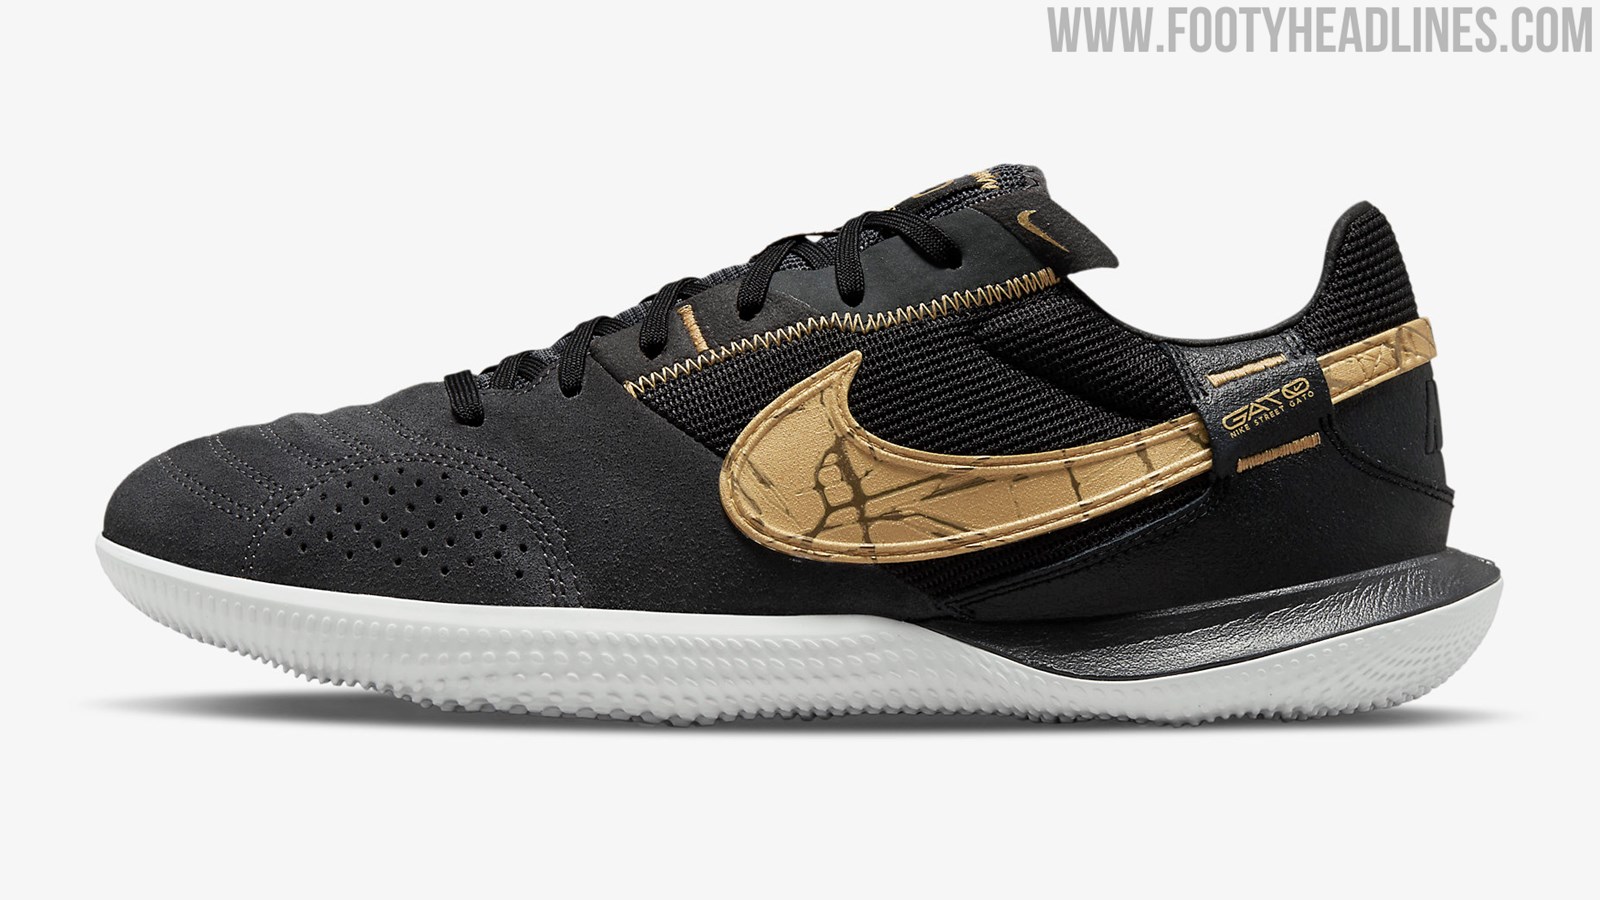 Black & Gold Nike Boots Leaked - Footy Headlines